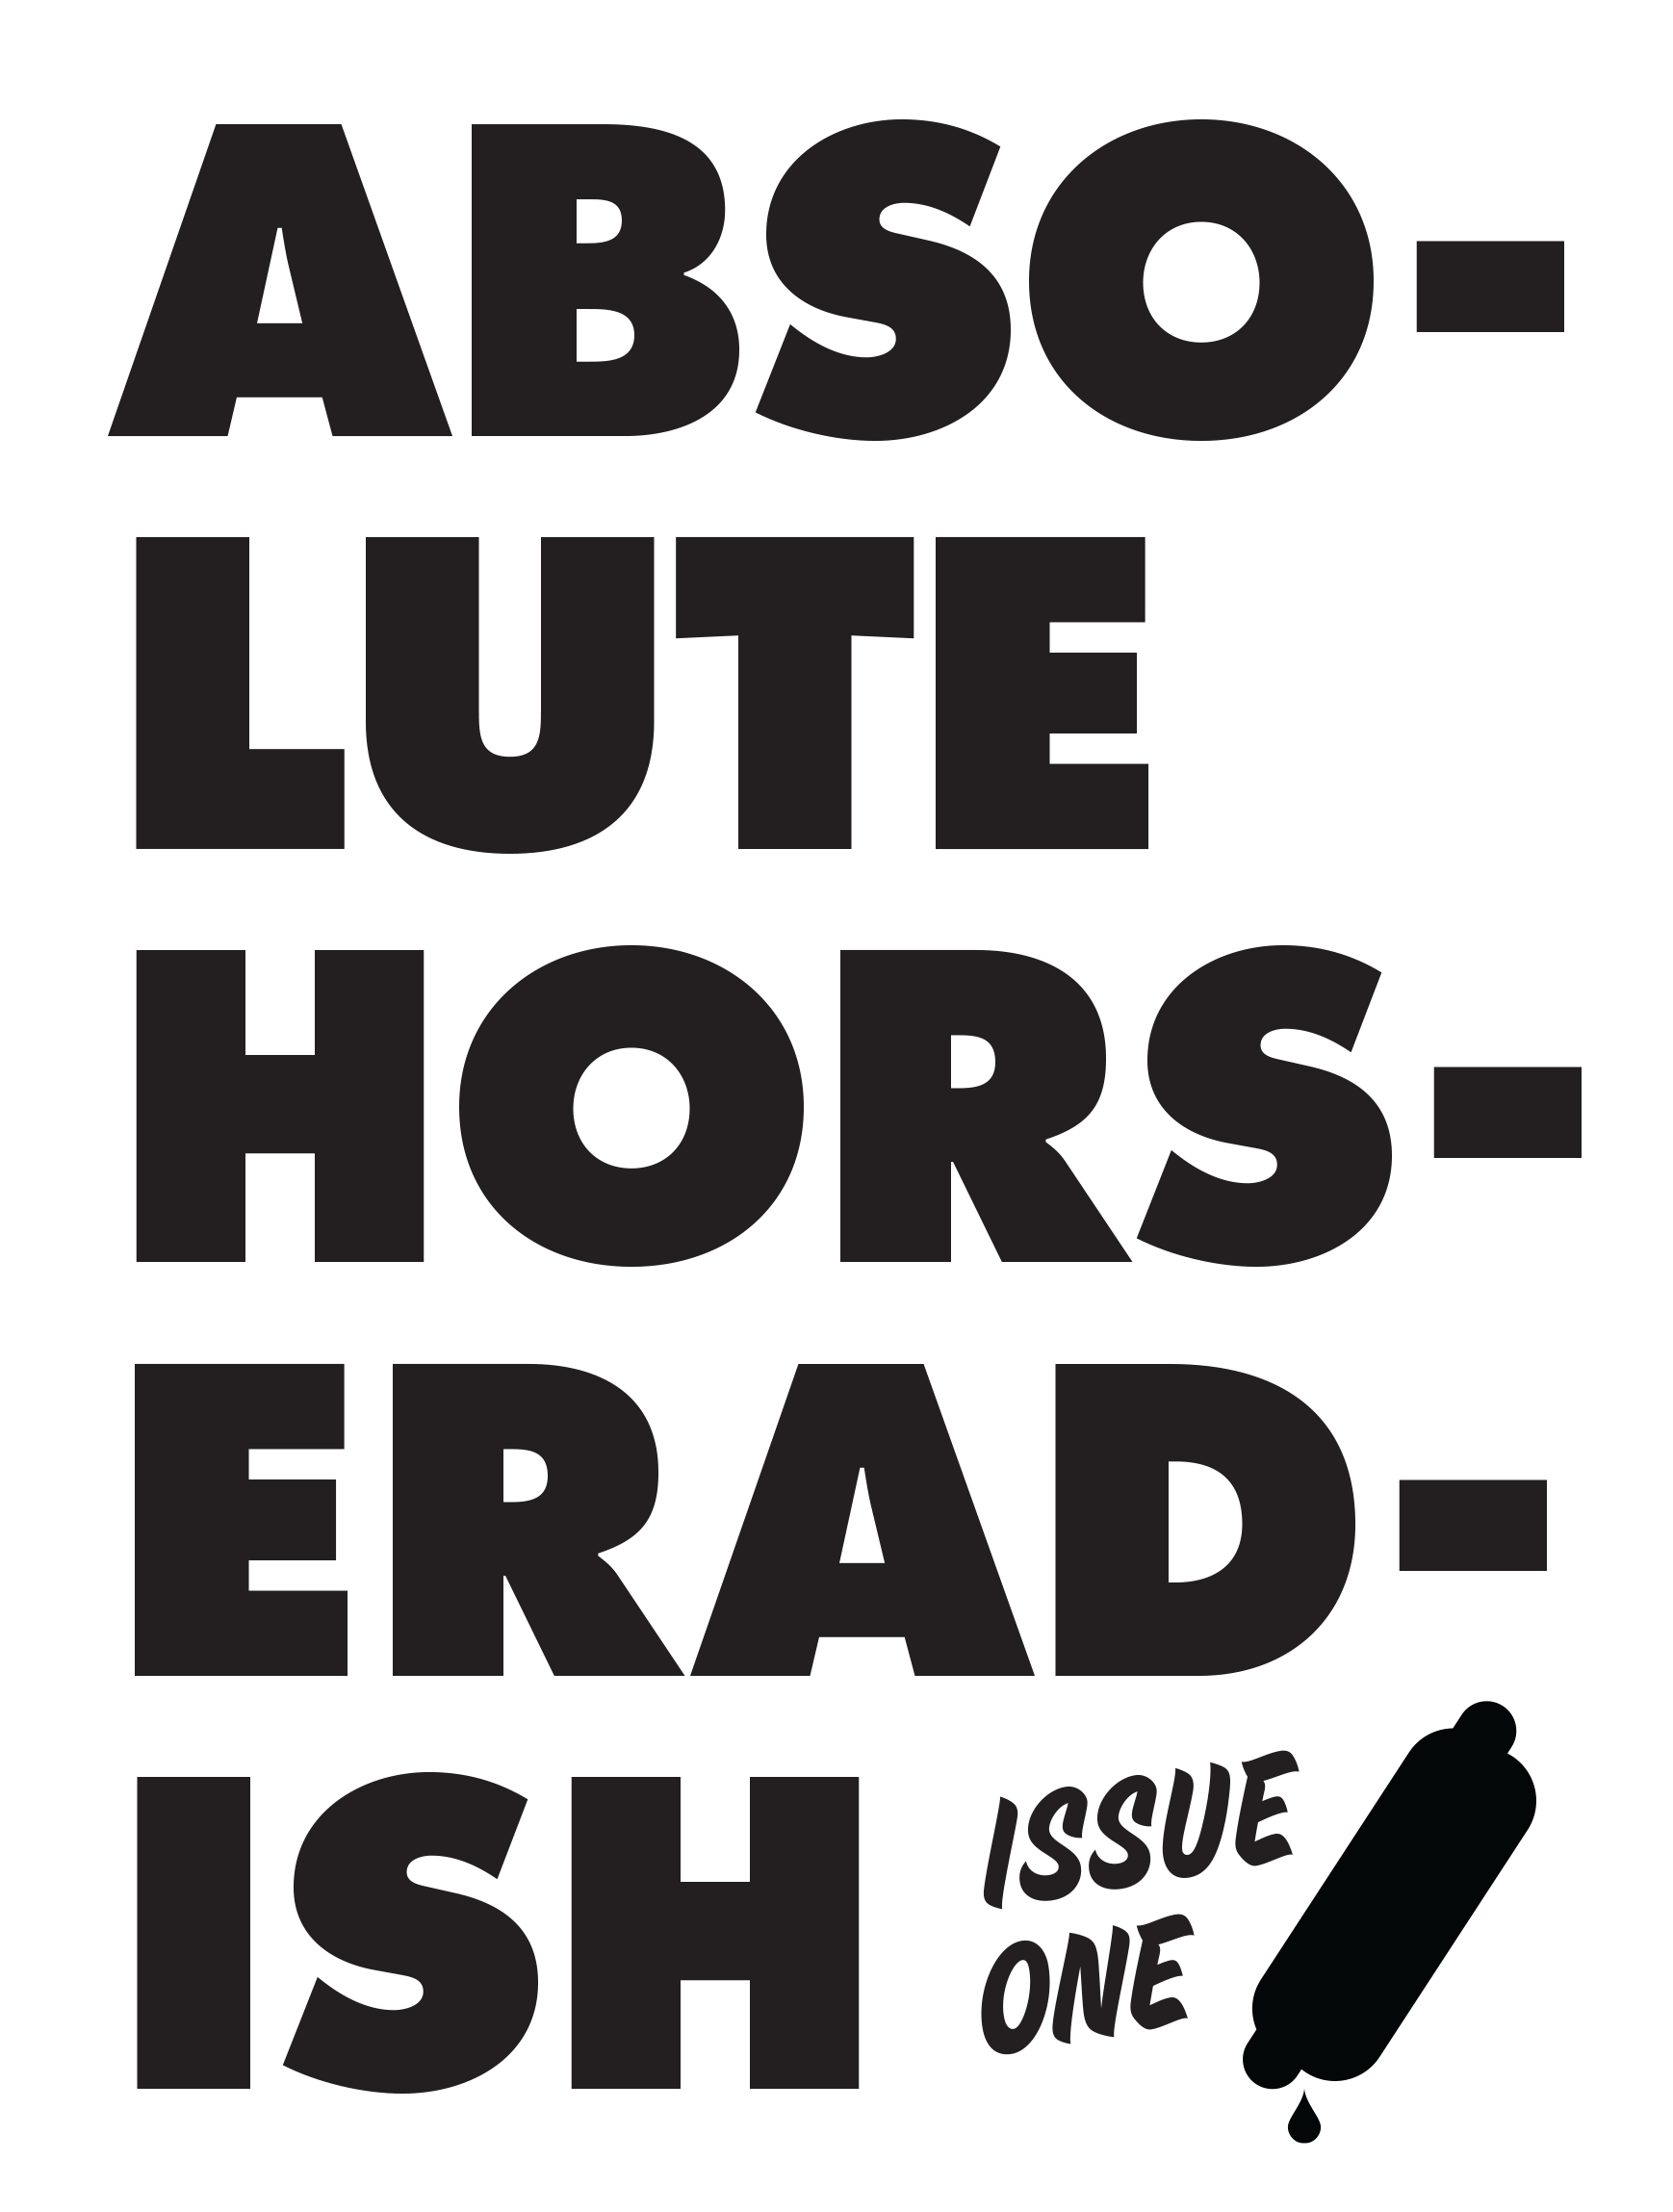 The Logo / Masthead from Issue 1 of Absolute Horseradish Magazine.